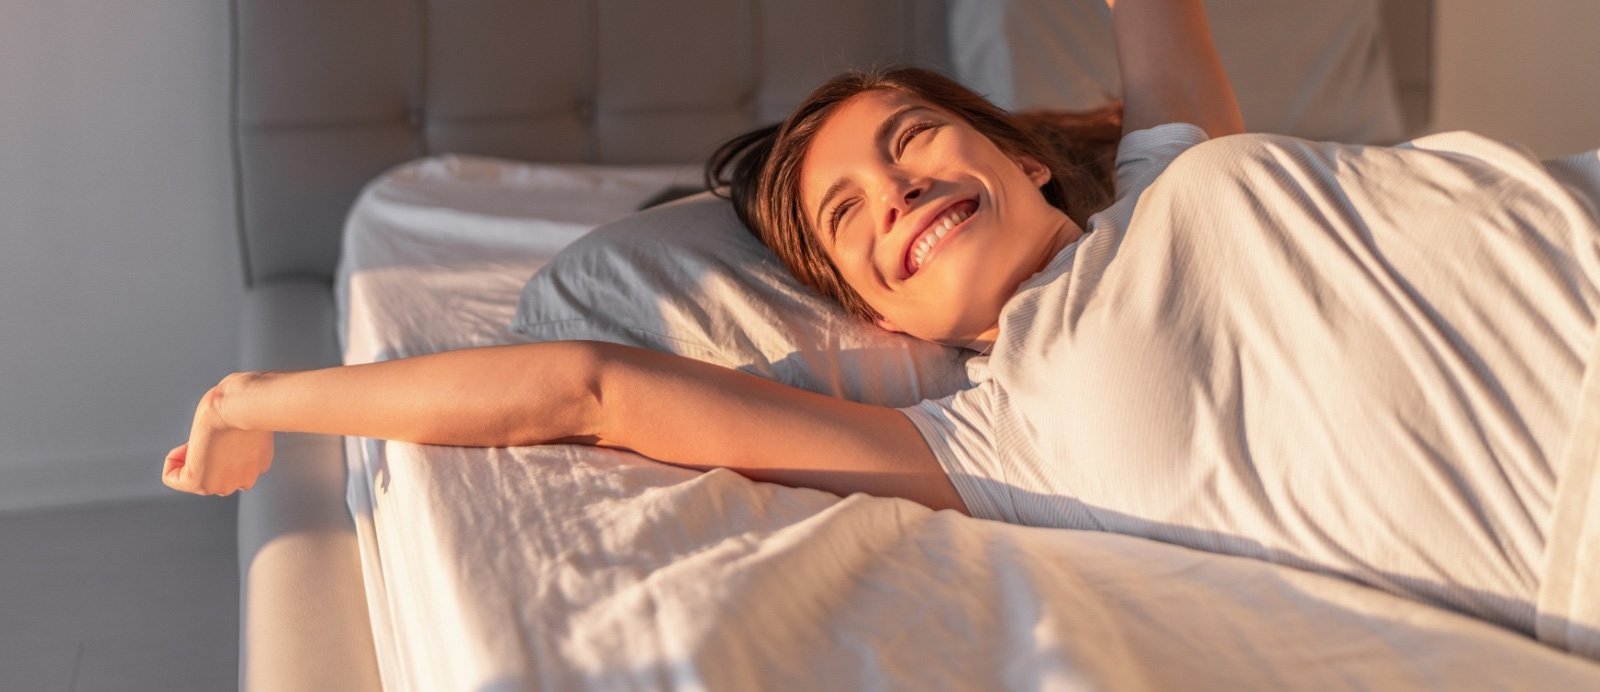 Woman waking feeling rested thanks to sleep apnea treatment